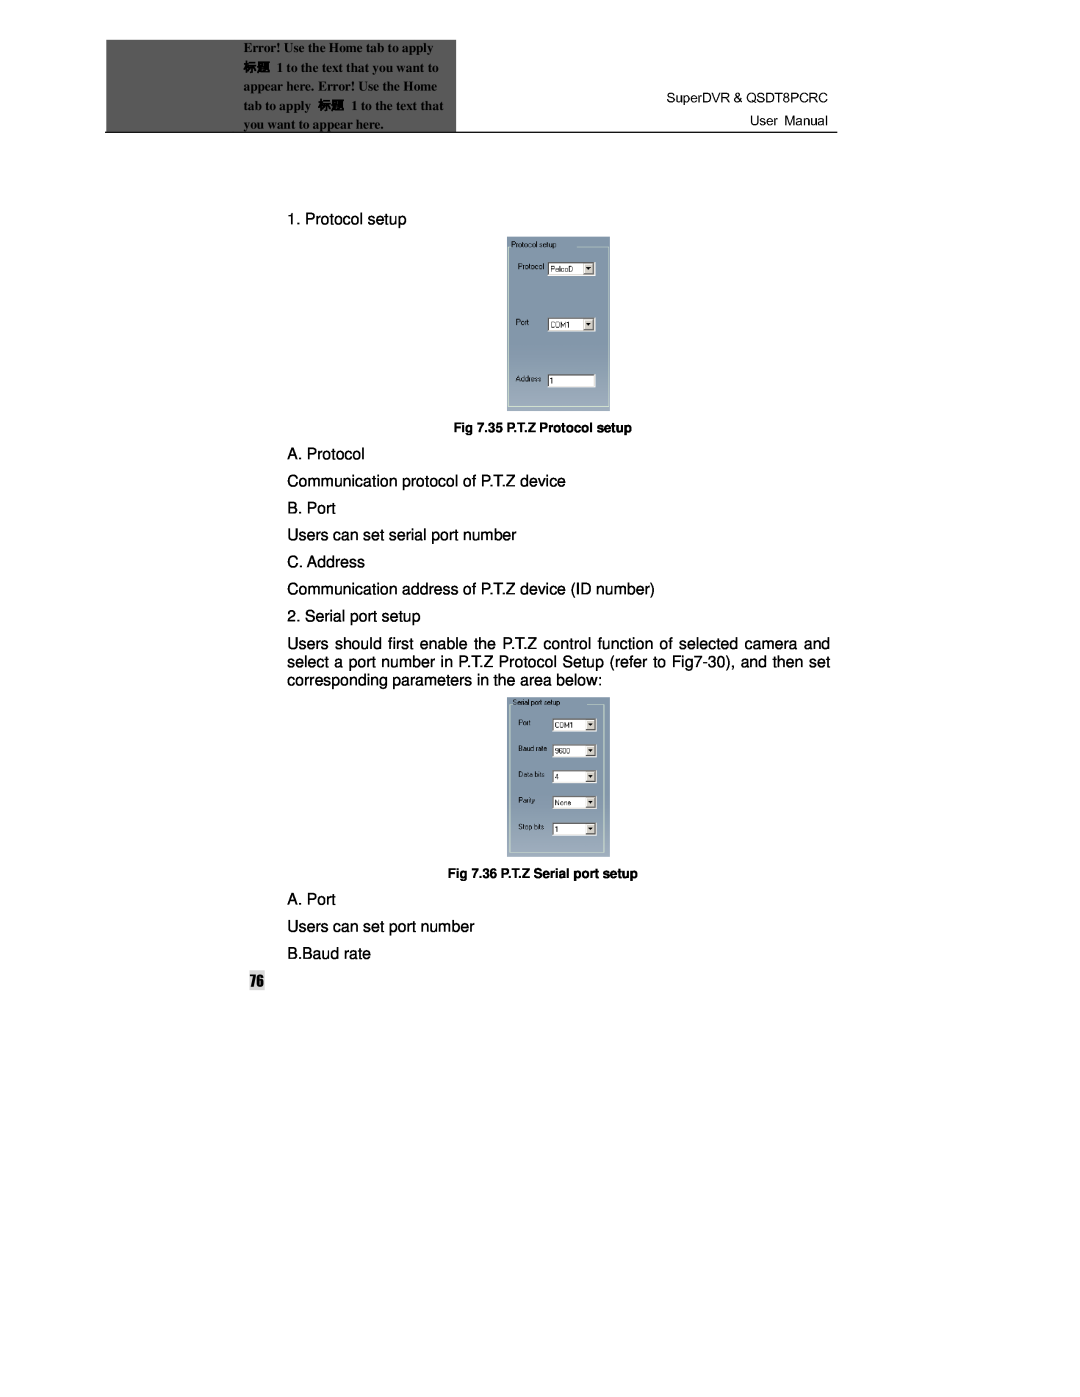 Q-See manual User Manual, SuperDVR & QSDT8PCRC, Protocol setup 